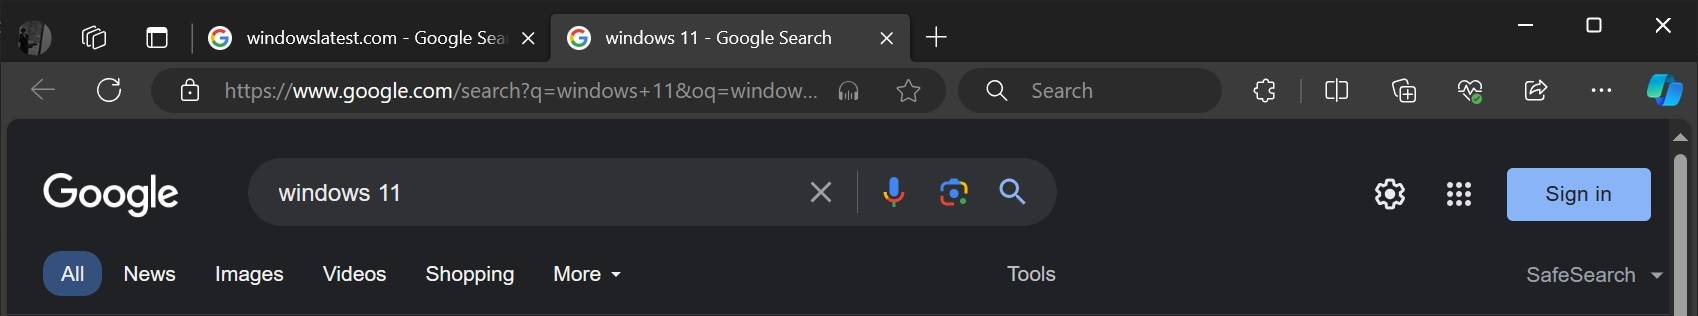 Microsoft-Edge-second-search-bar